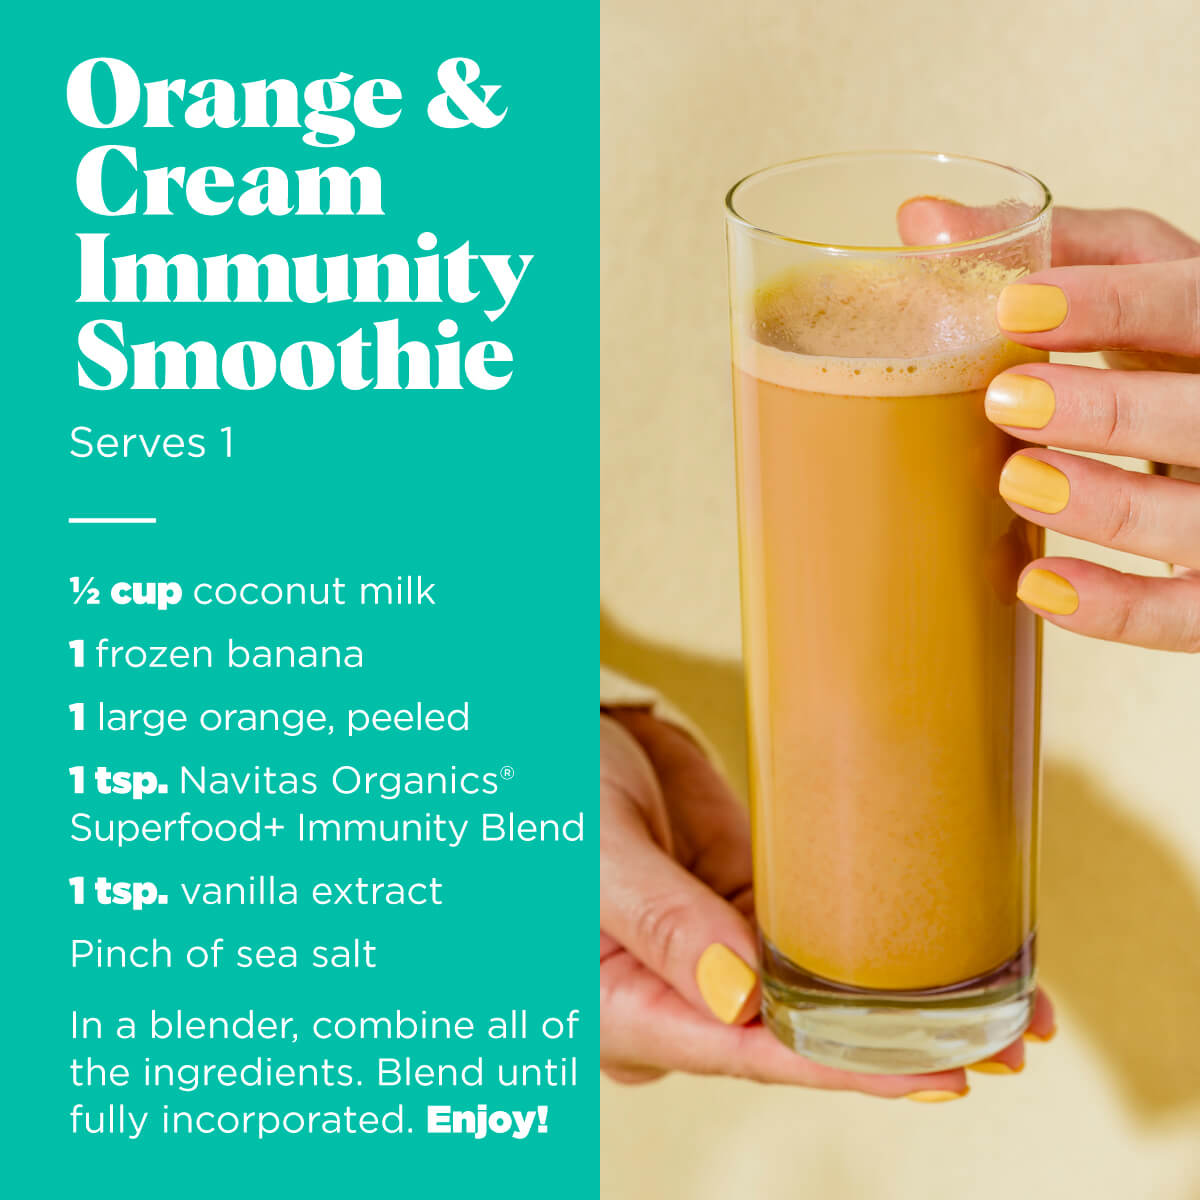 Orange & Cream Immunity Smoothie Recipe made with Navitas Organics Superfood+ Immunity Blend